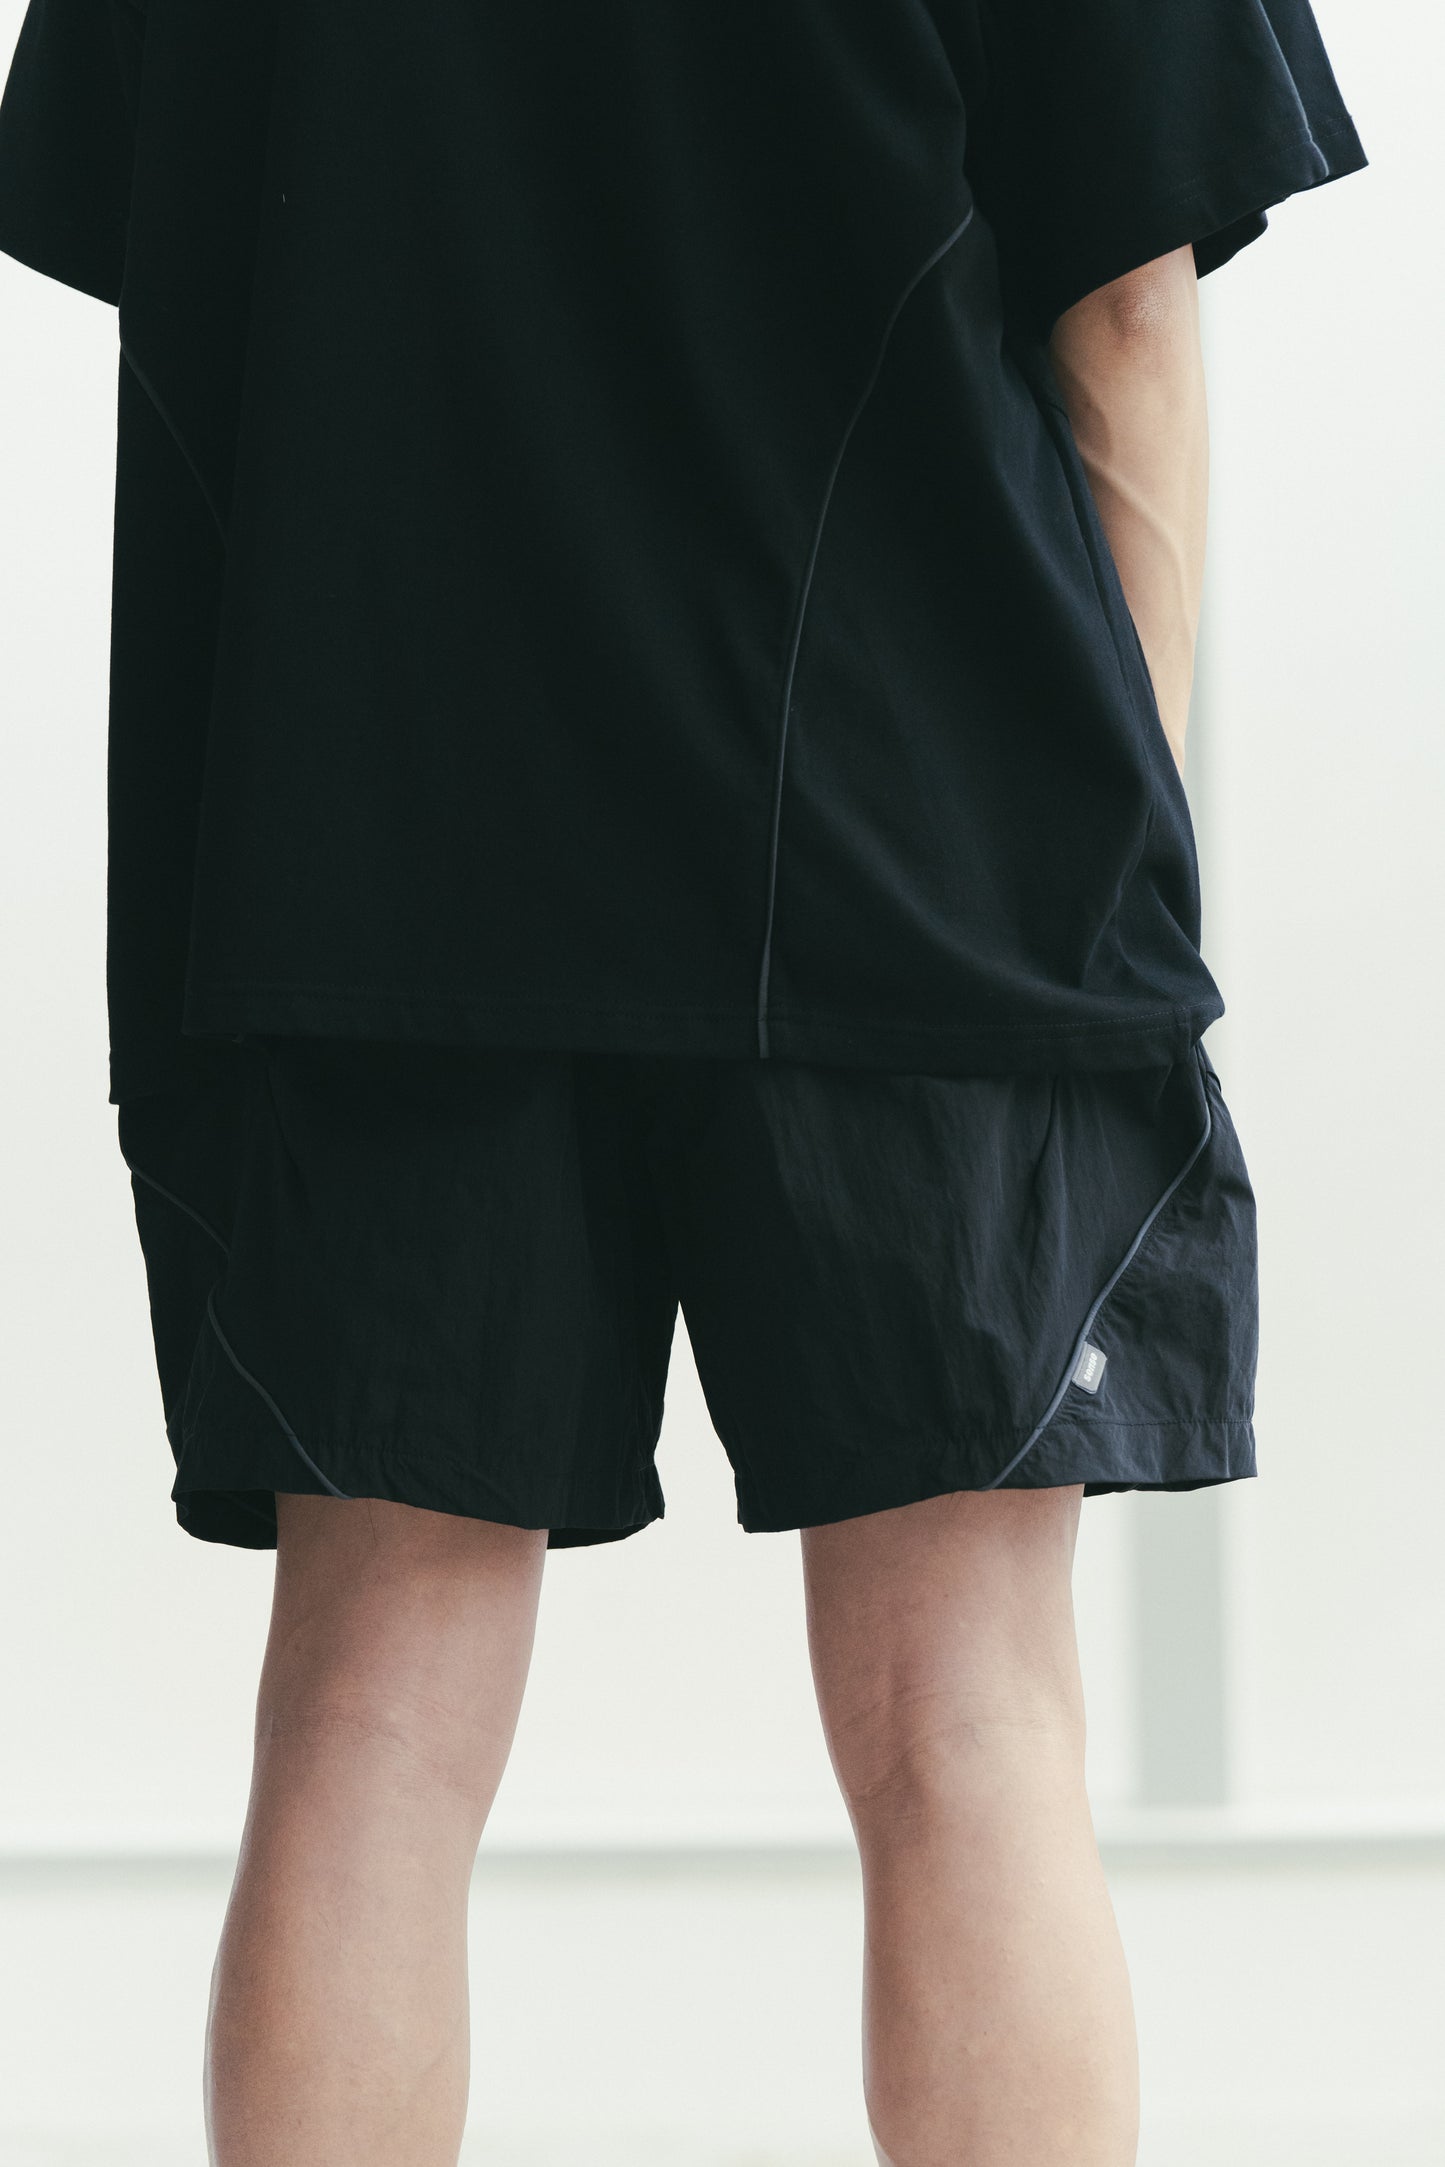 
                  
                    Patch Technical Shorts Black【M24-01BK】
                  
                